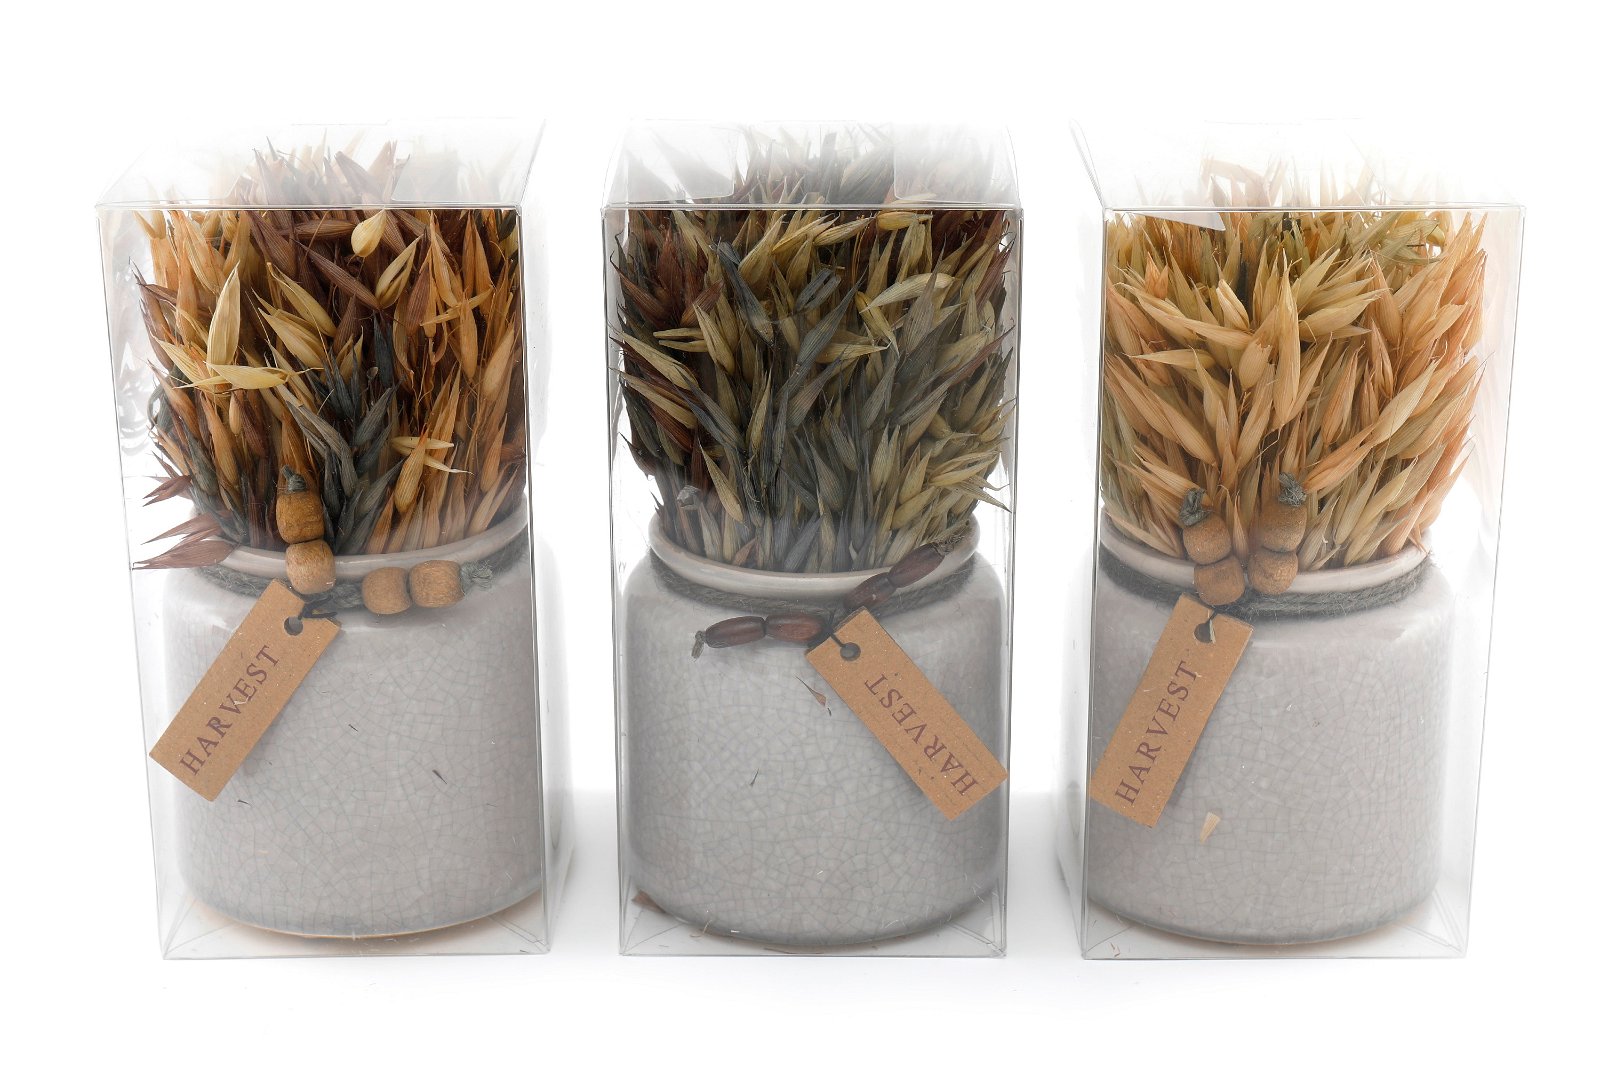 Set of 3 Dried Grasses In Ceramic Pots